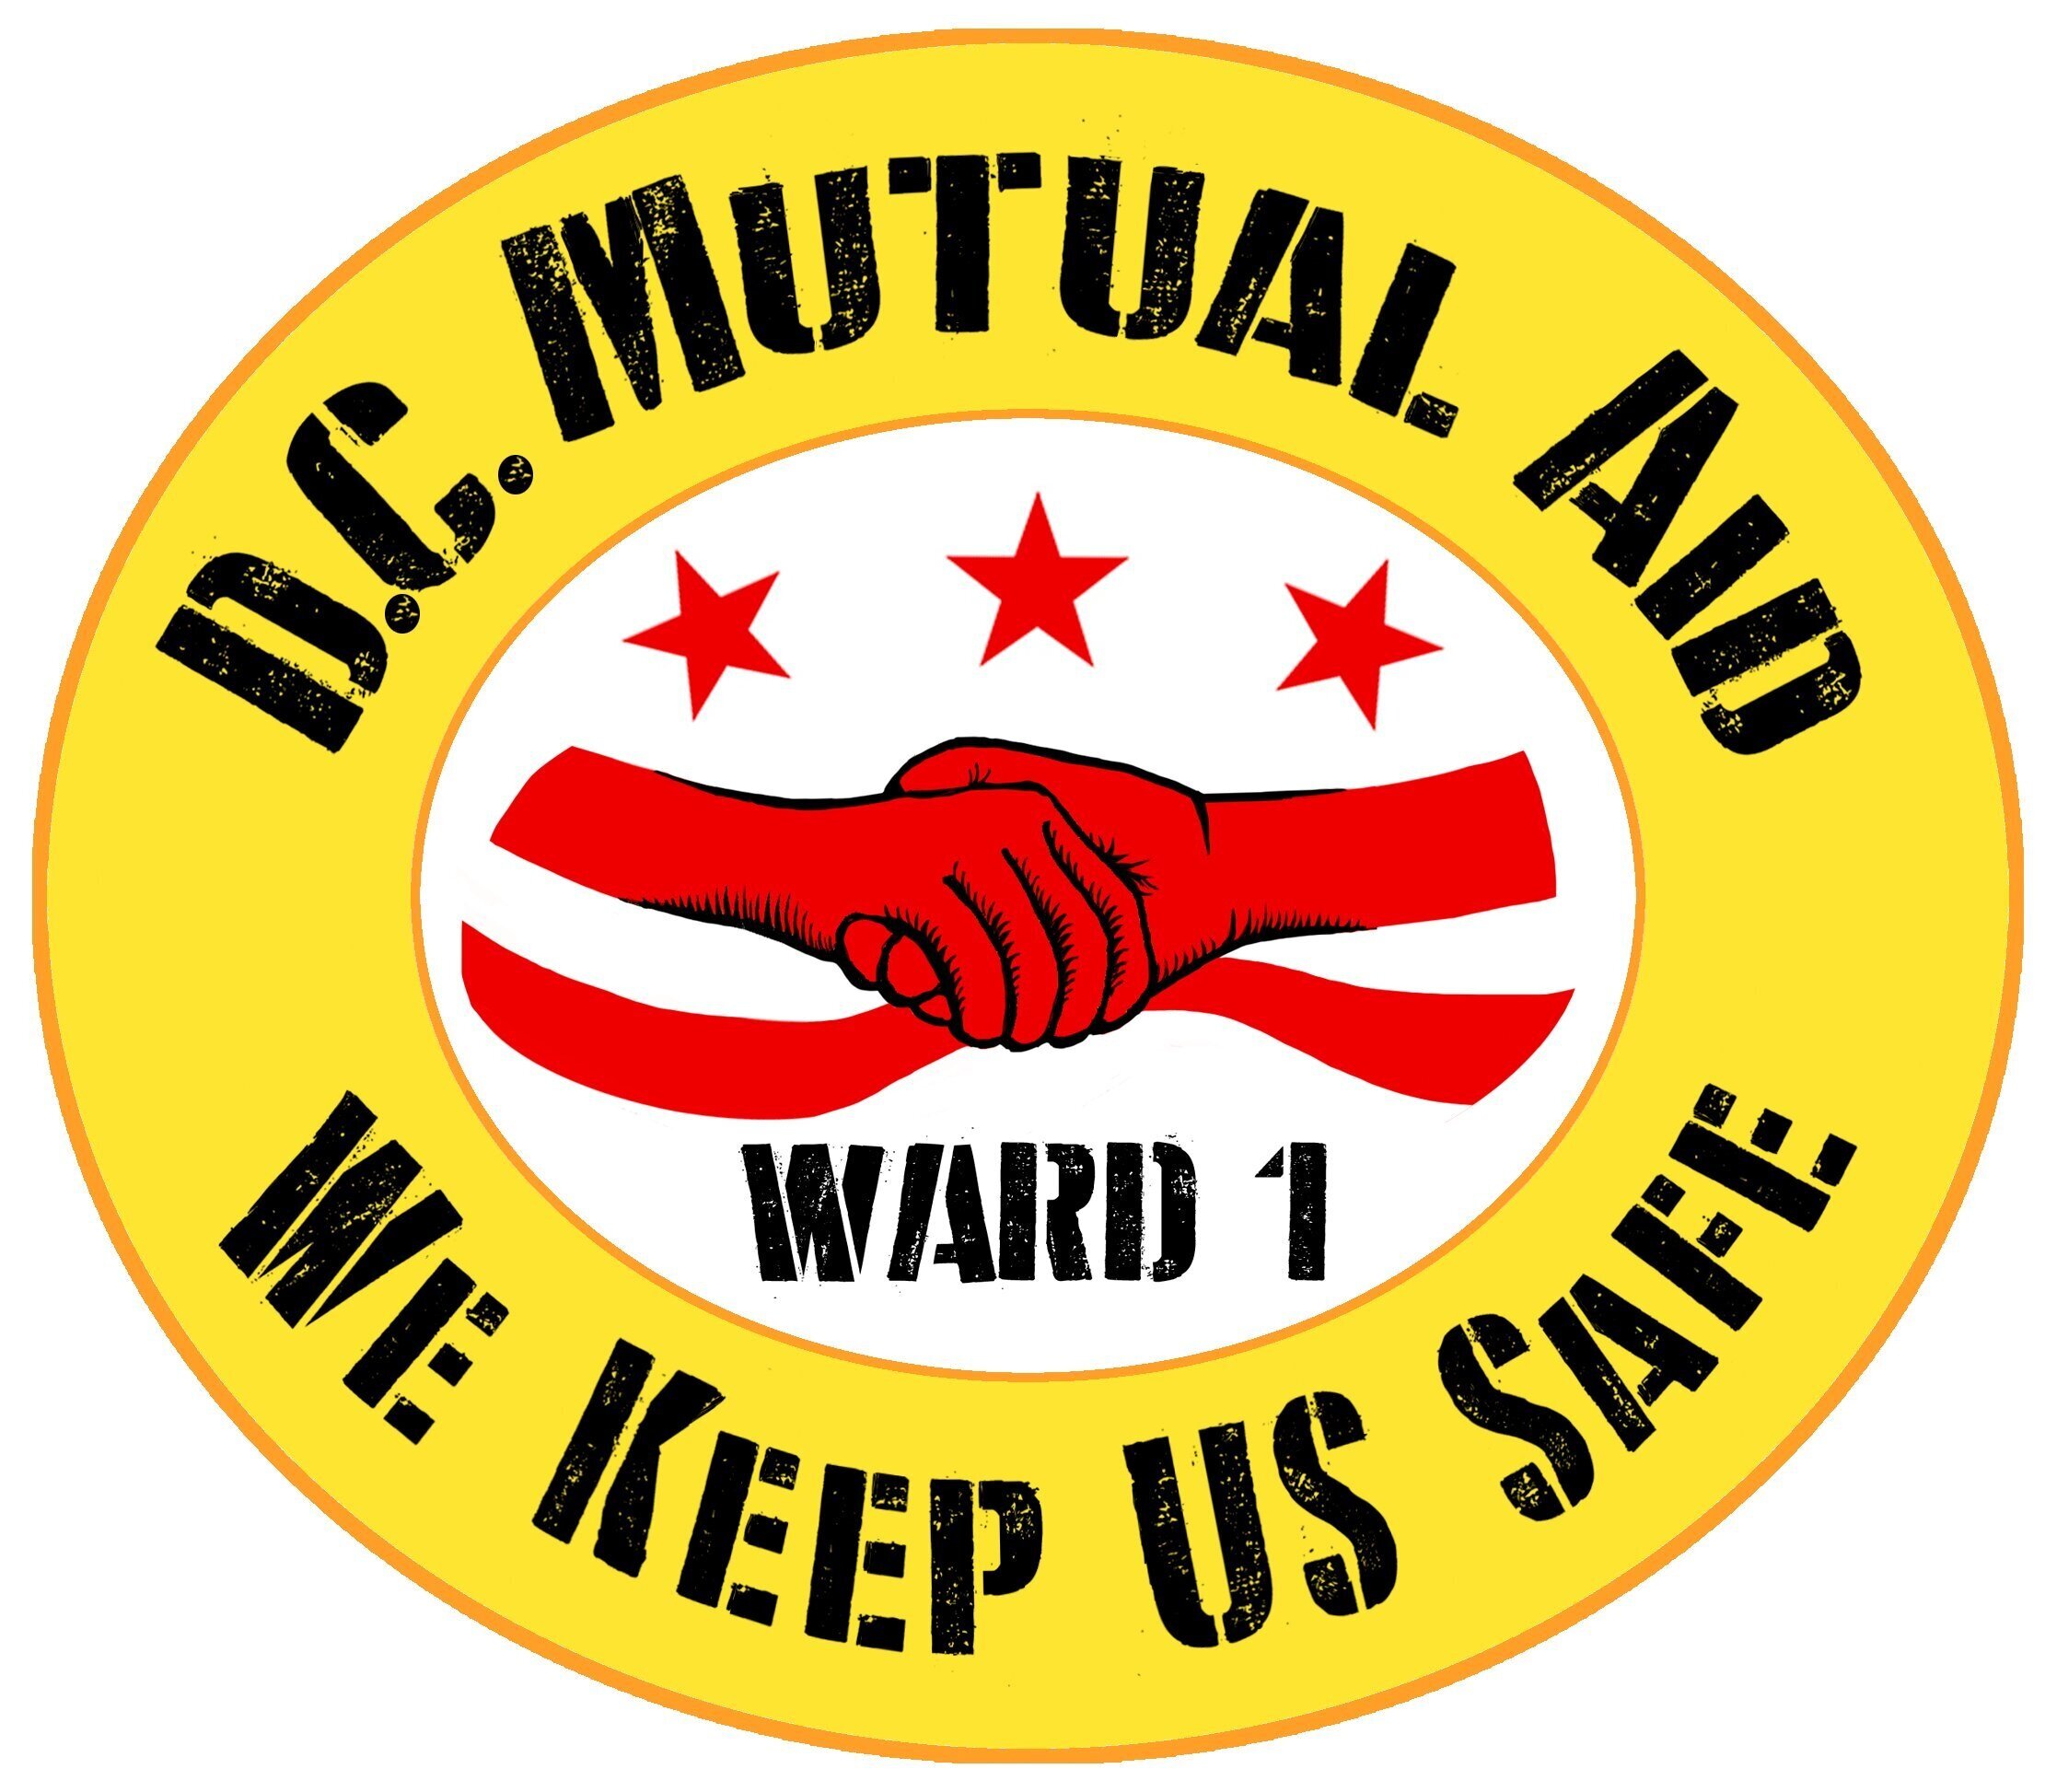 Washington DC Ward 3 Mutual Aid Neighbor Support - Open Collective